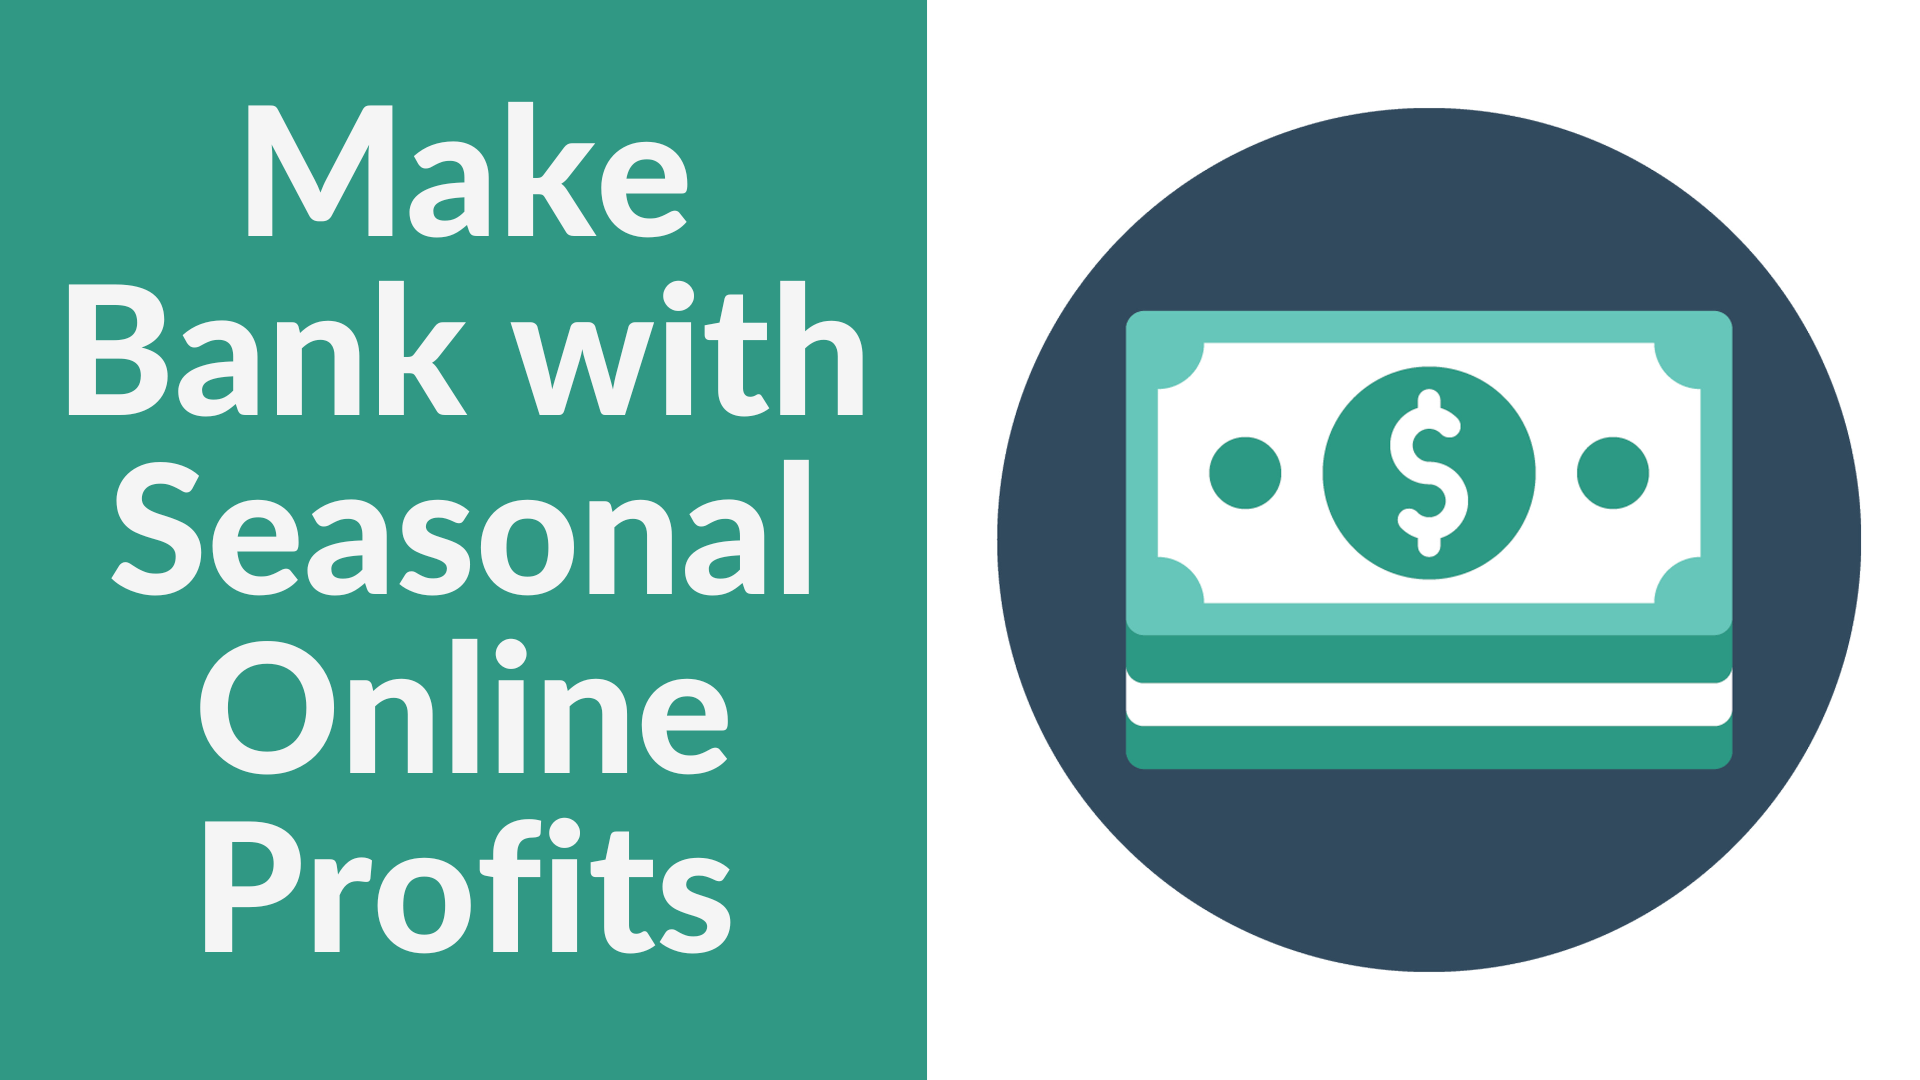 Make Bank with Seasonal Online Profits